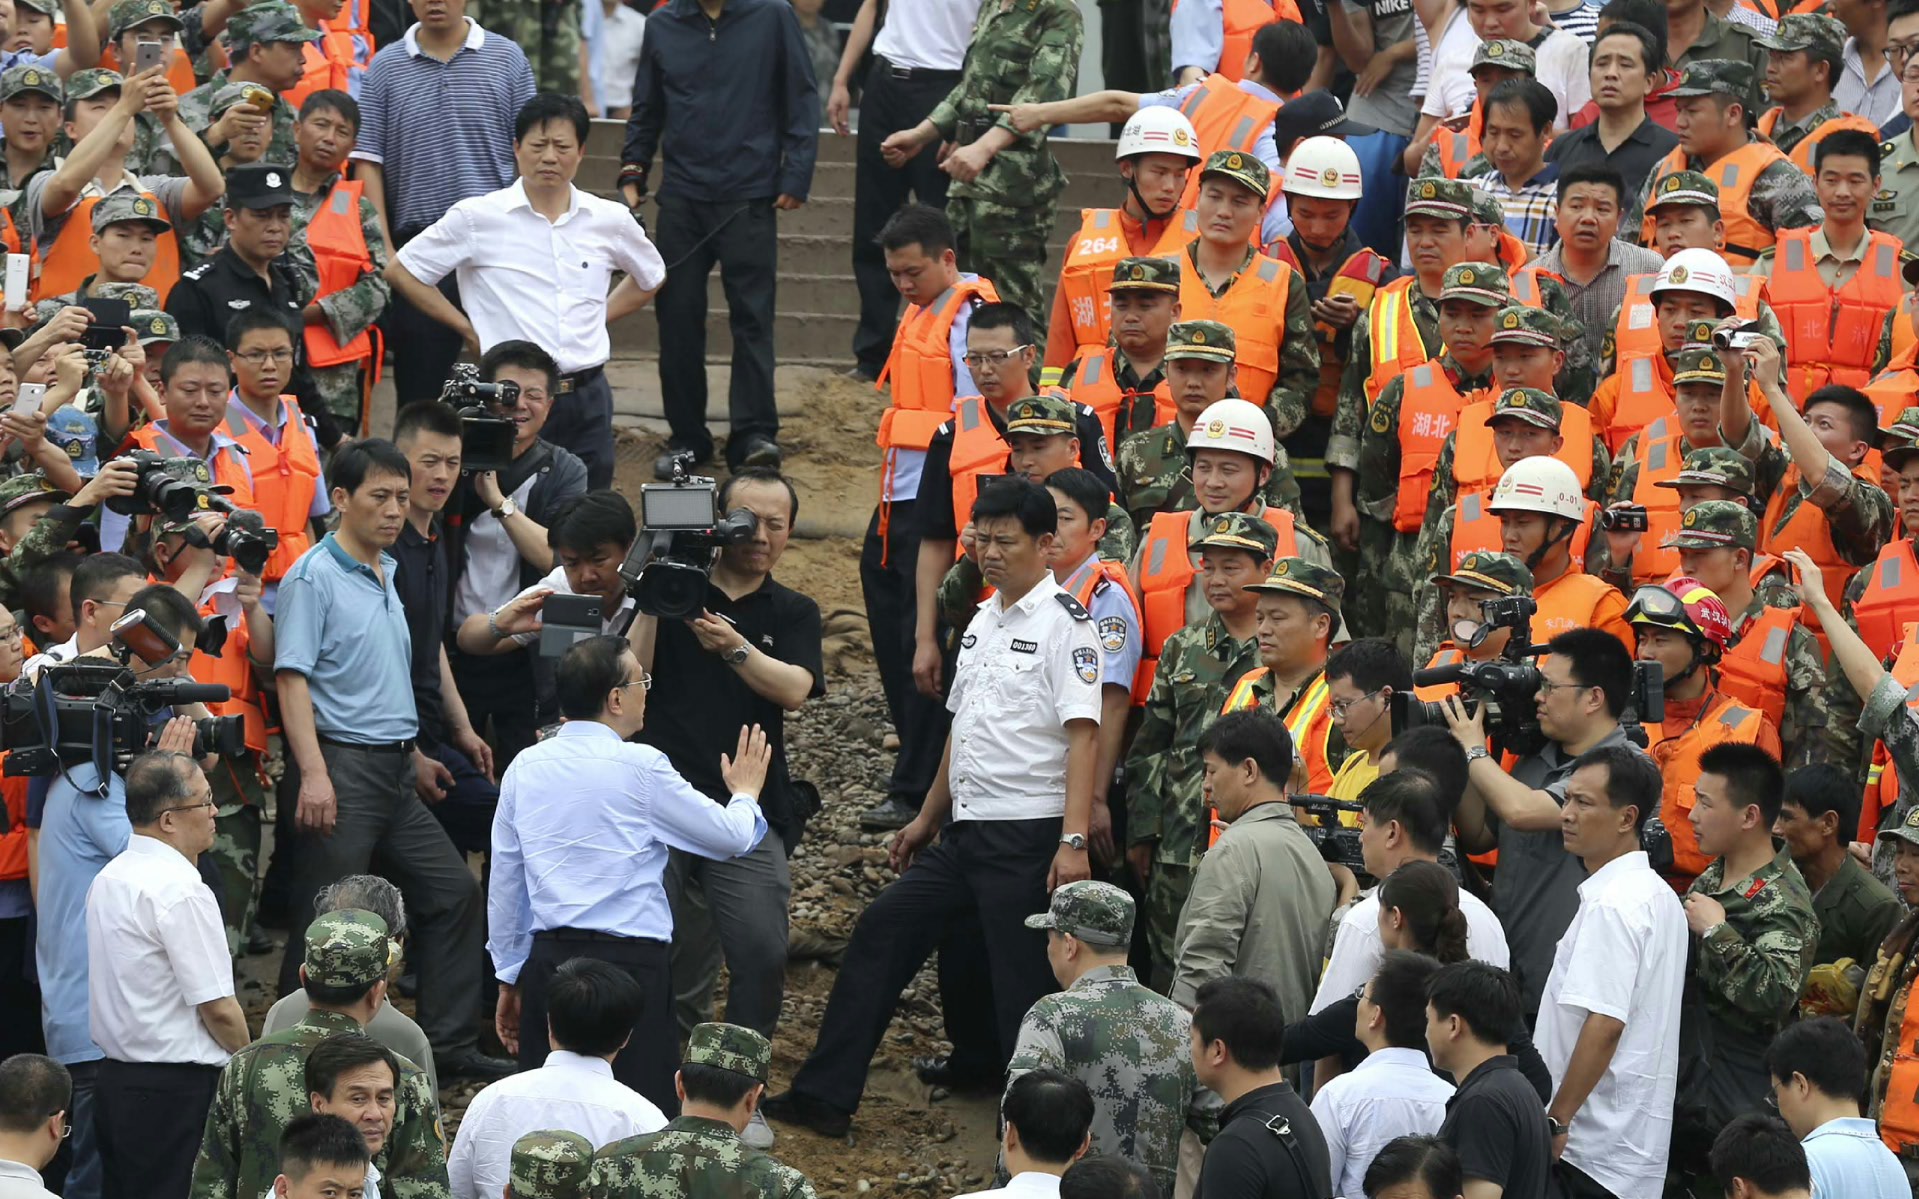 Prioritize saving lives, premier tells Yangtze rescuers